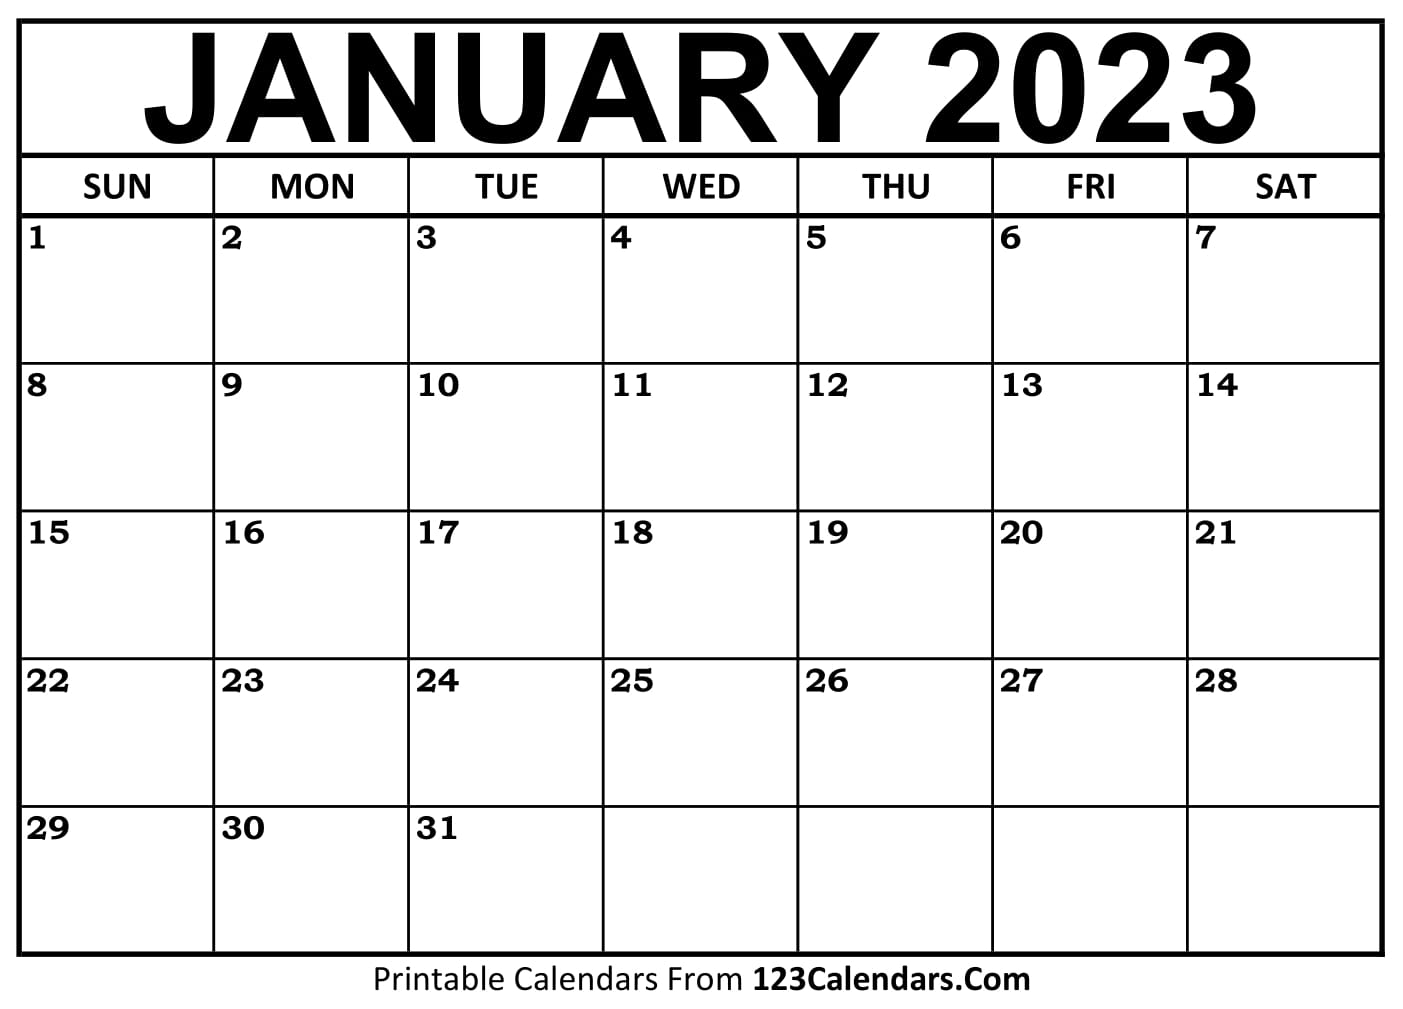 2023 canada calendar with holidays - 2023 canada calendar with holidays